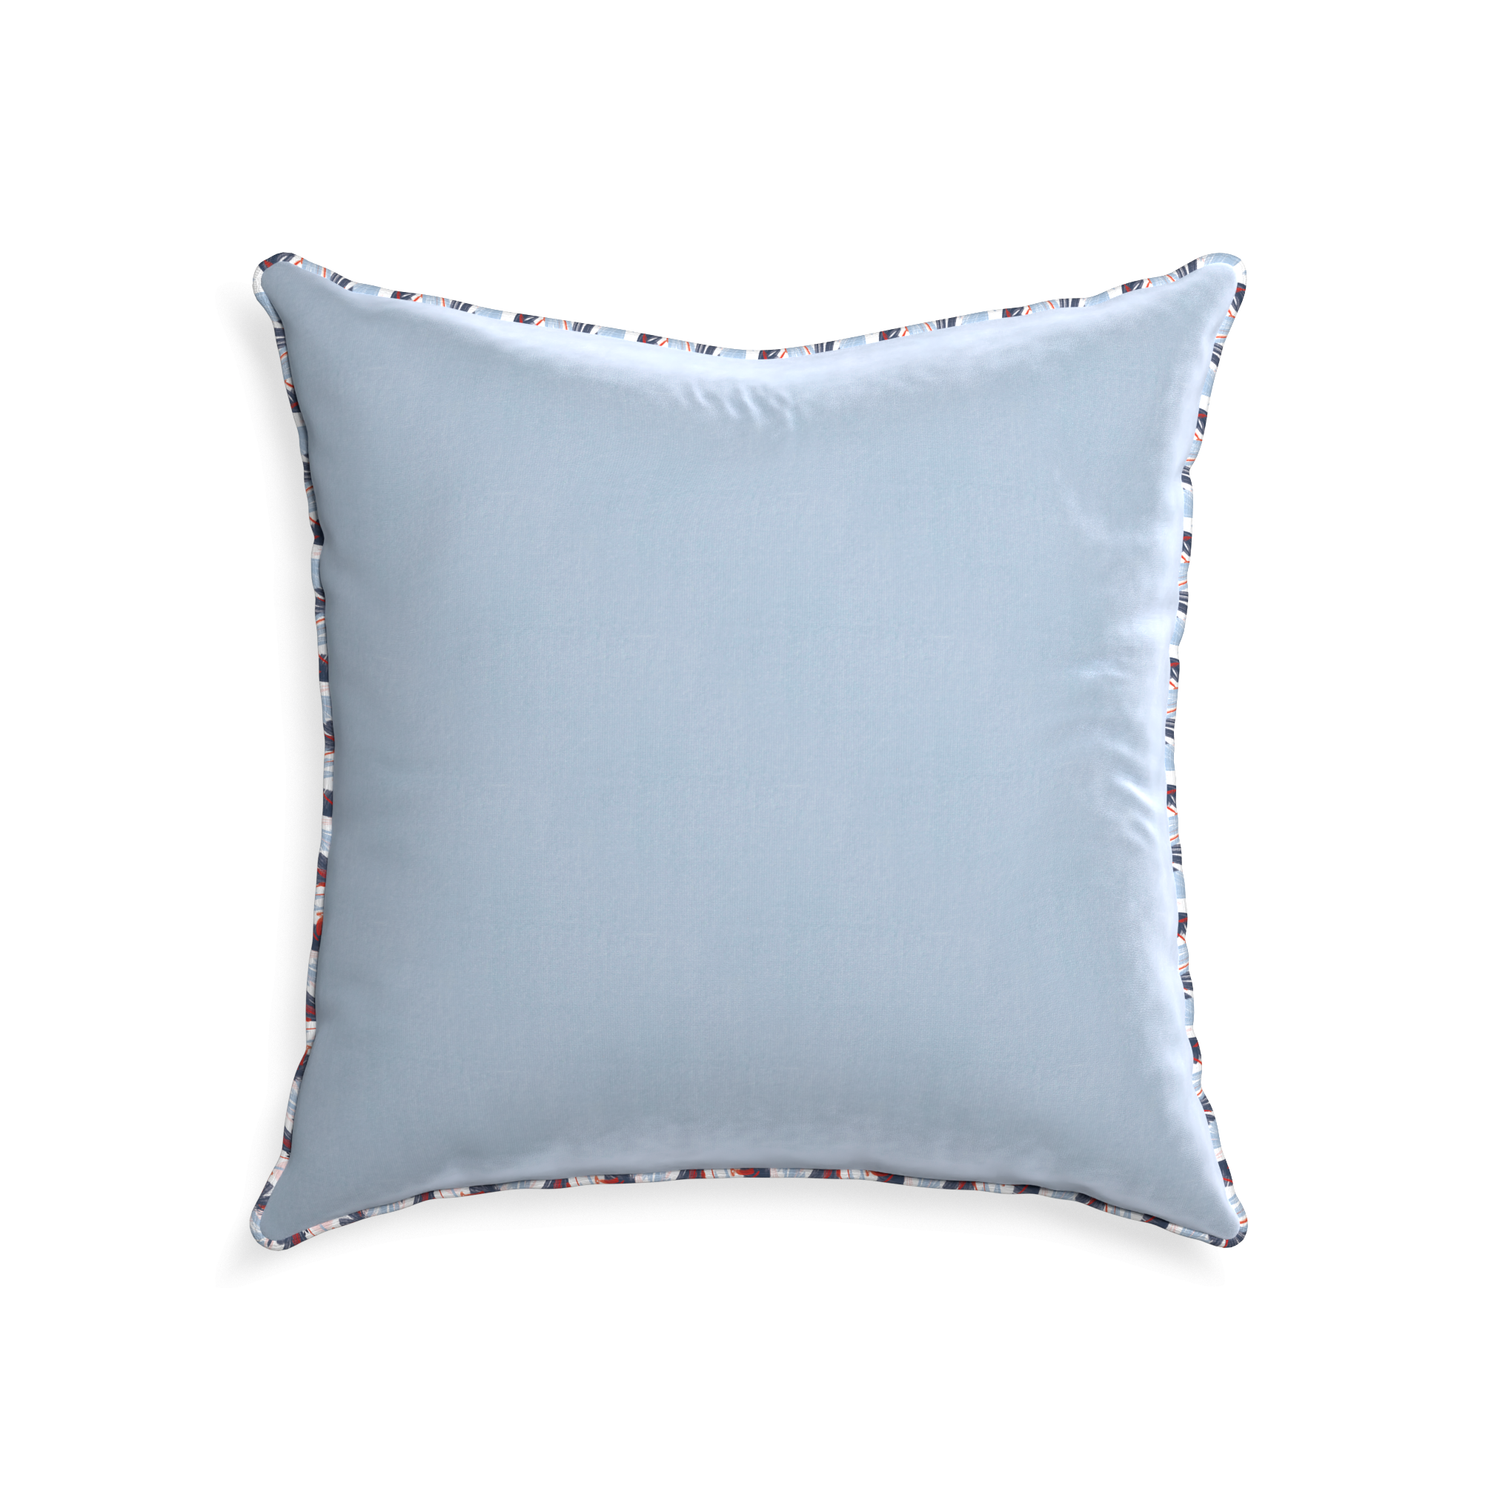 22-square sky velvet custom pillow with e piping on white background